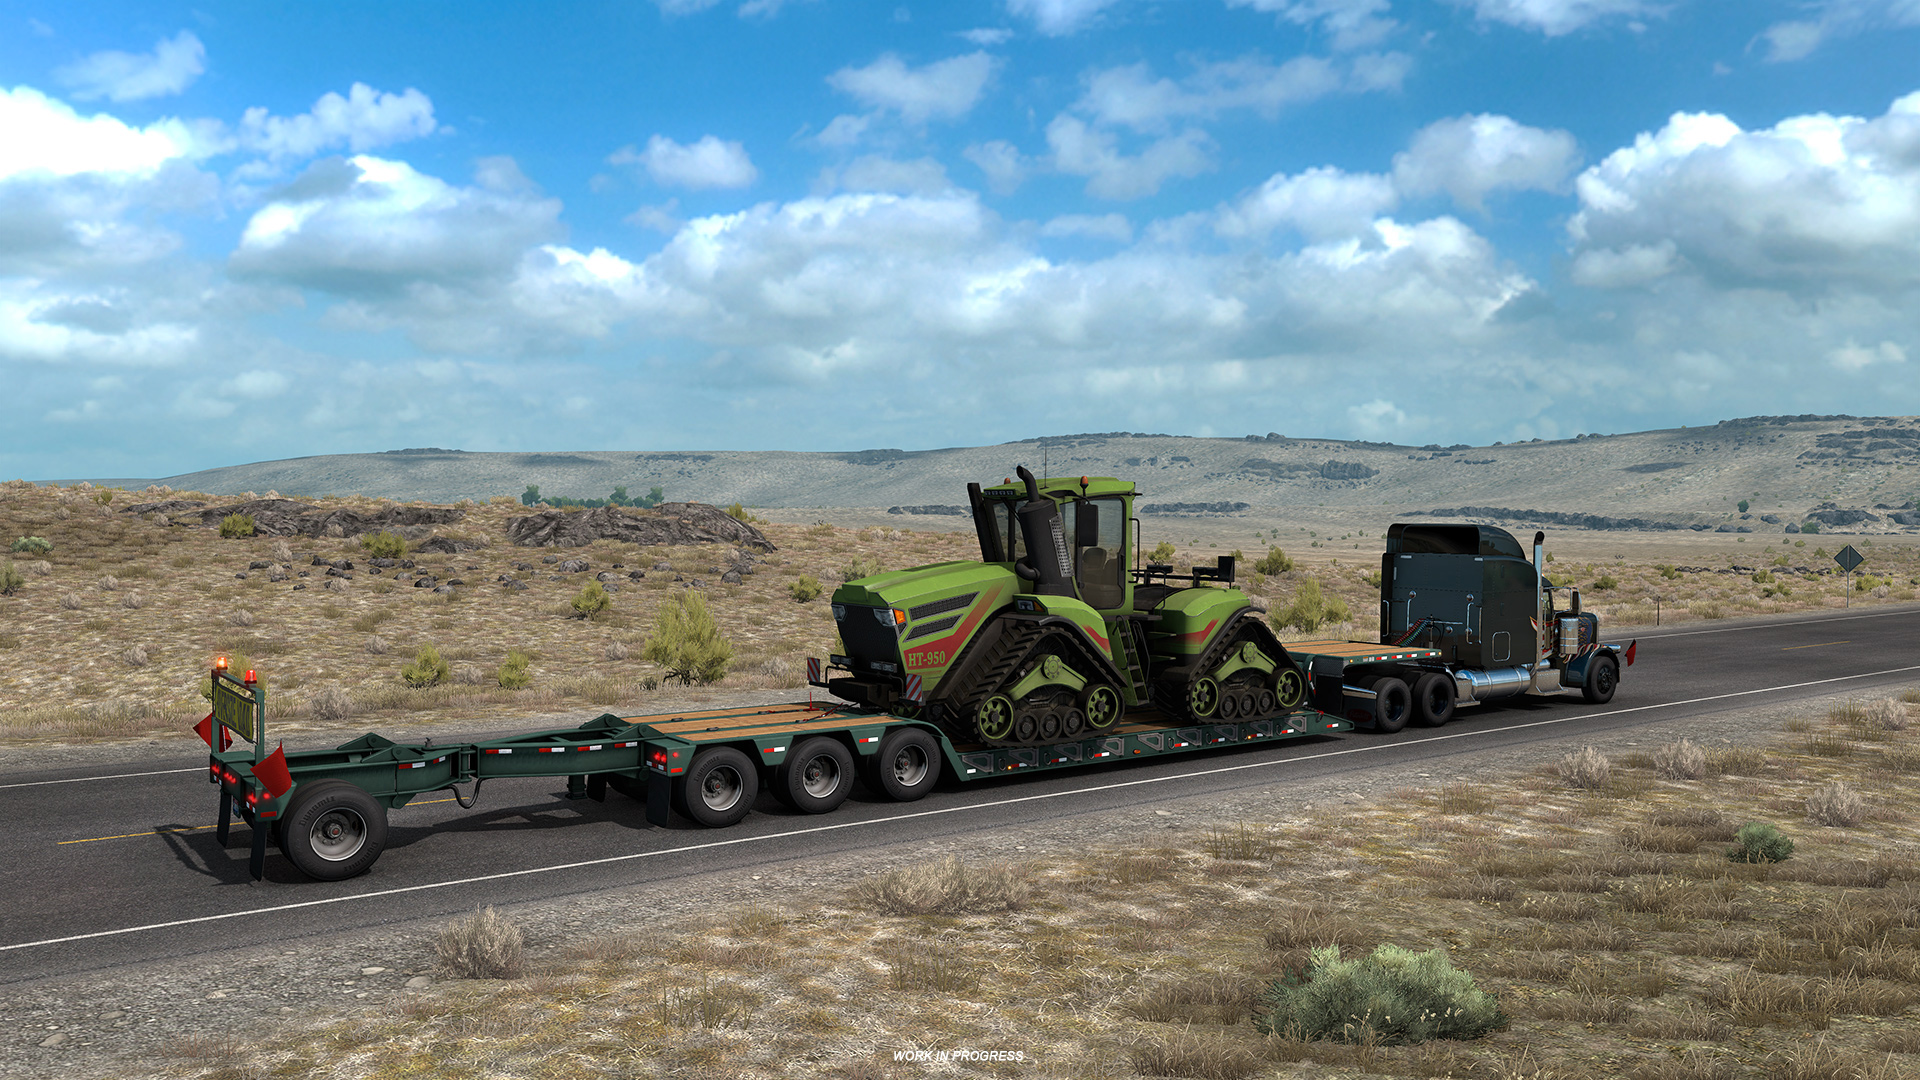 scs-software-s-blog-american-truck-simulator-1-39-update-experimental-open-beta